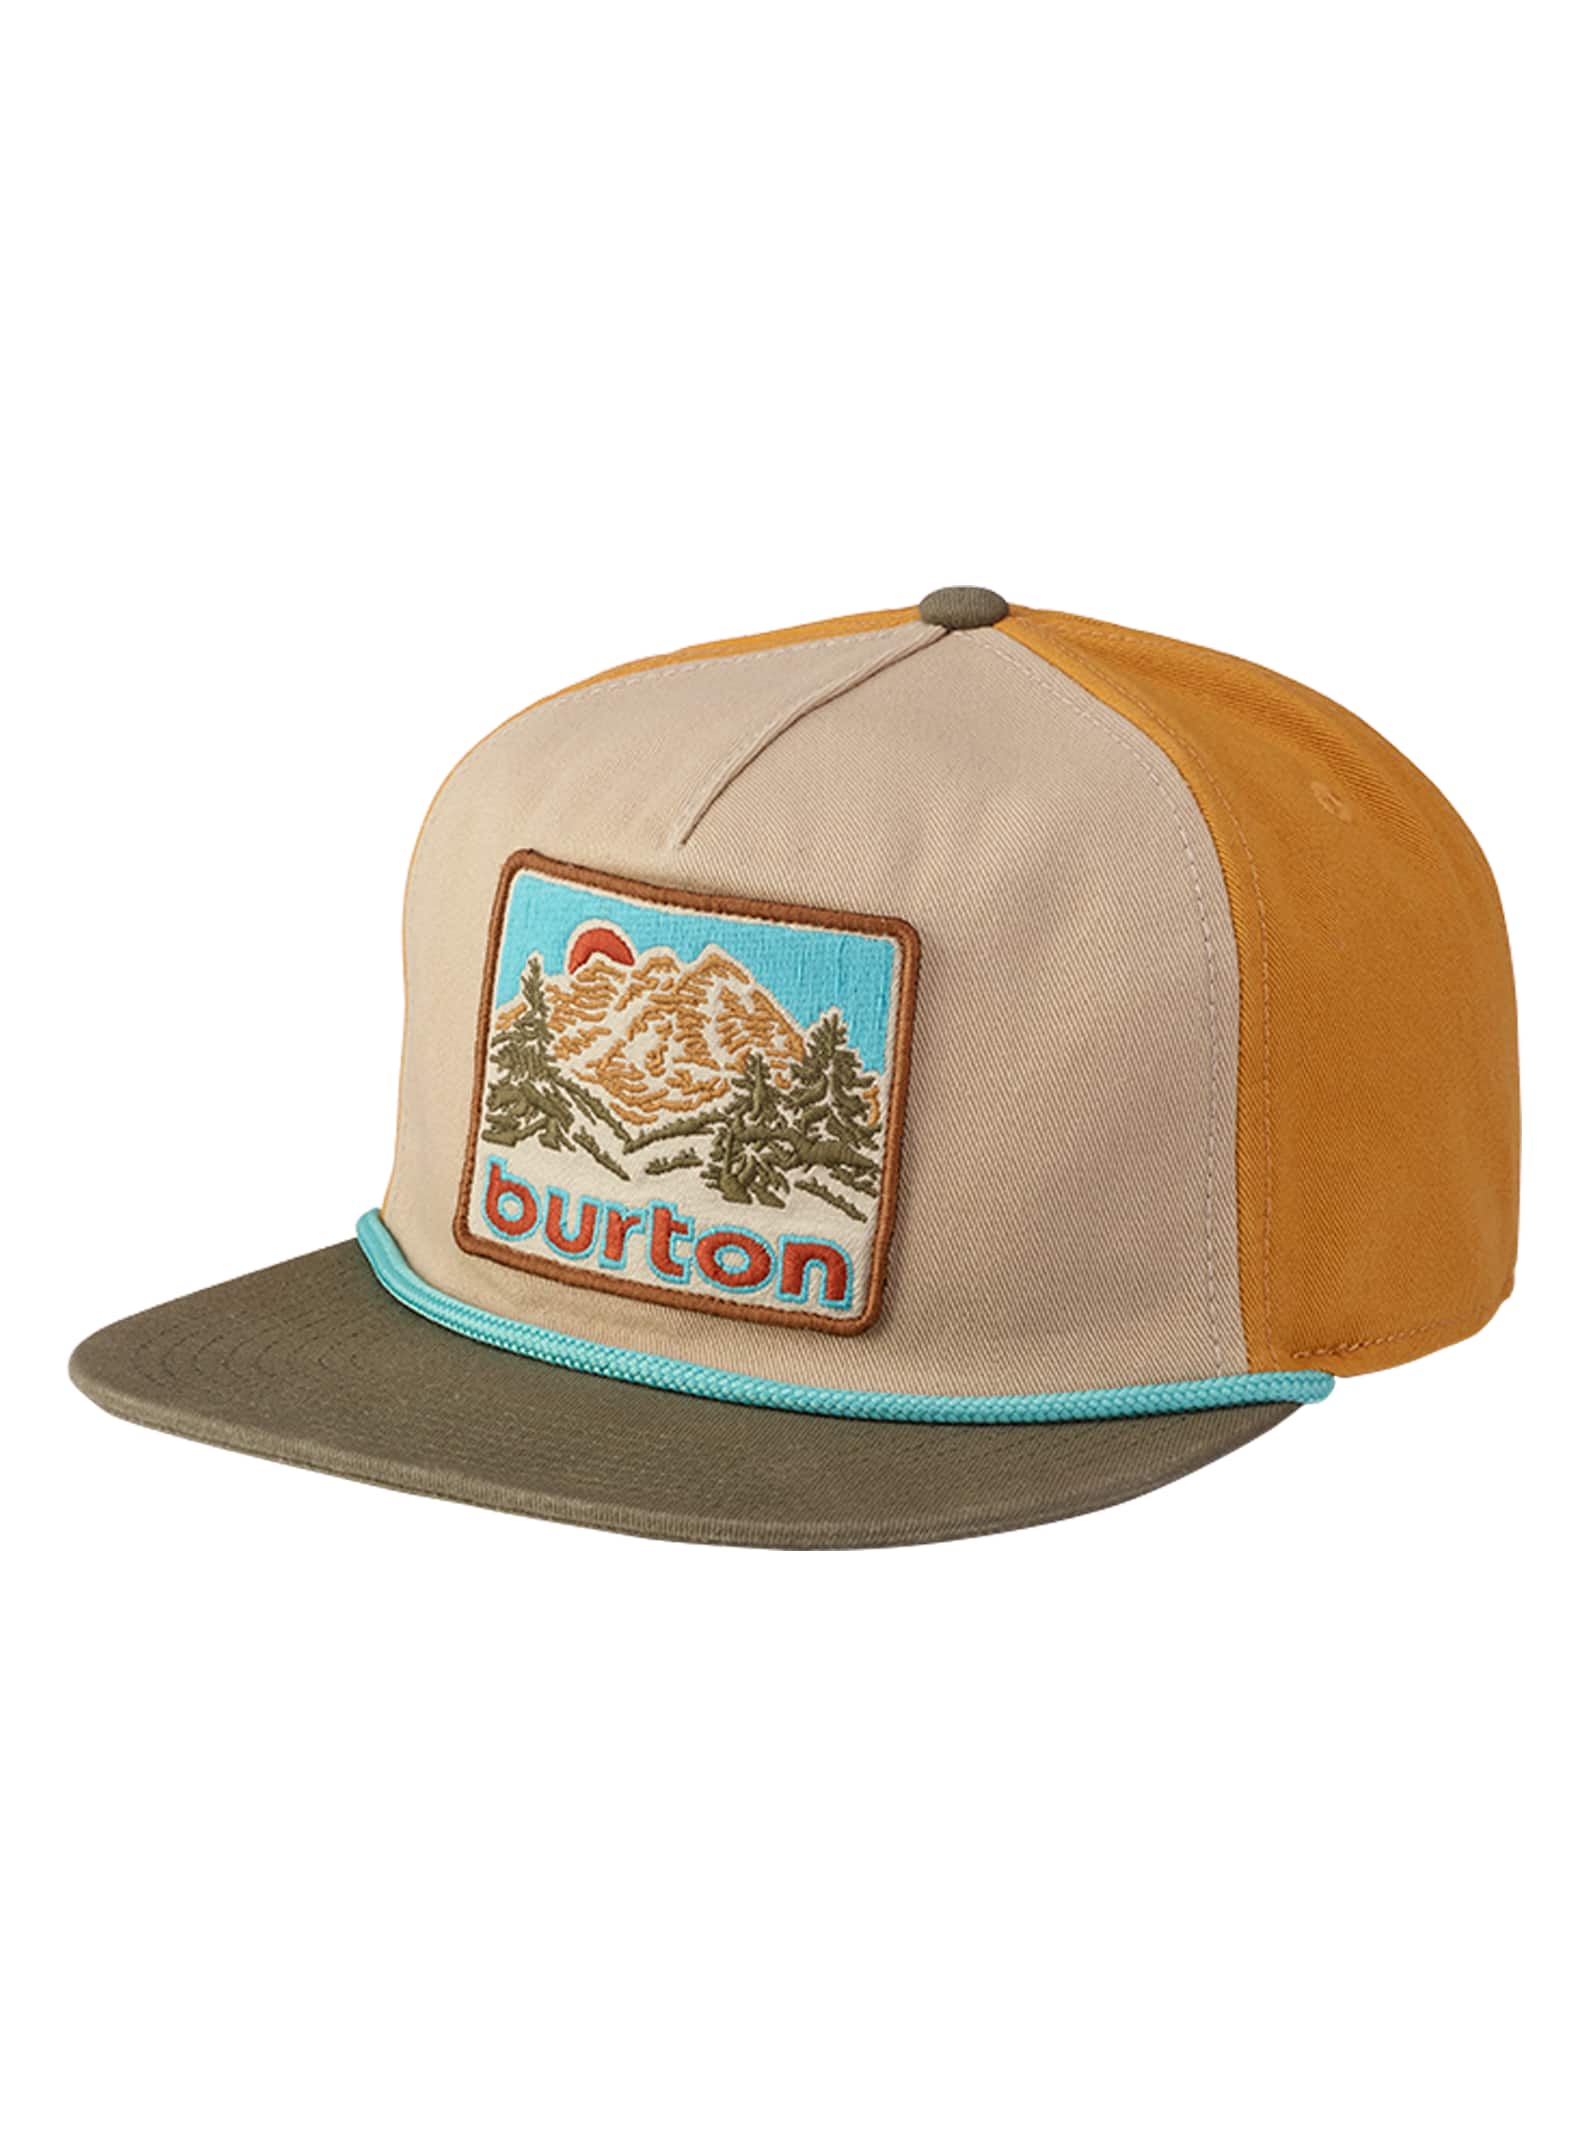 Burton Buckweed Snapback Hat | Burton.com Winter 2020 JP